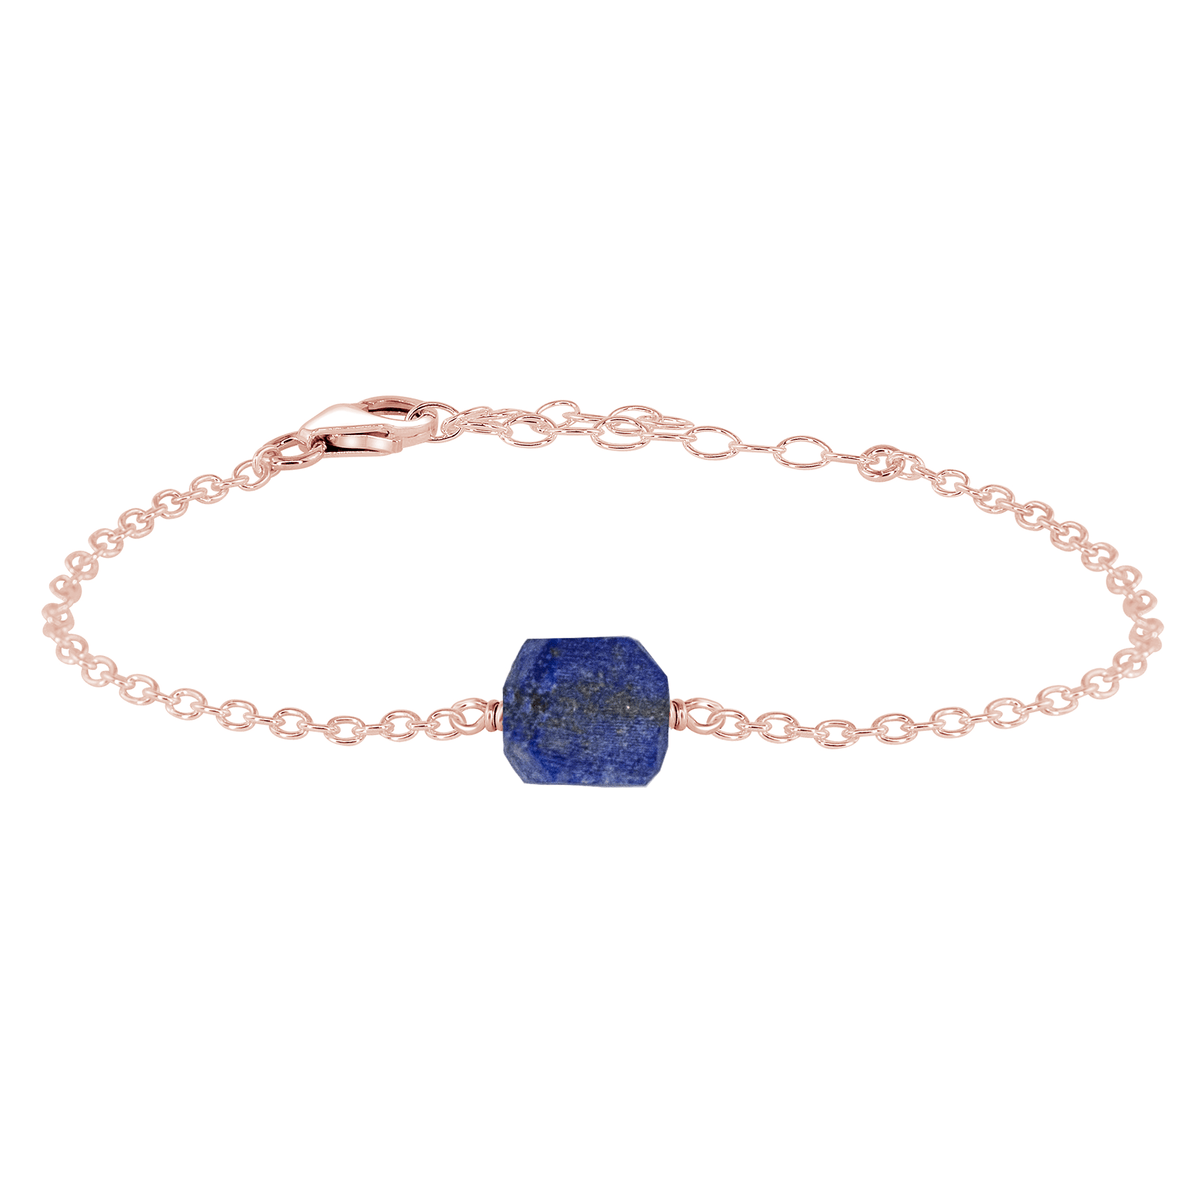 Raw Lapis Lazuli Crystal Nugget Bracelet - Raw Lapis Lazuli Crystal Nugget Bracelet - 14k Rose Gold Fill - Luna Tide Handmade Crystal Jewellery